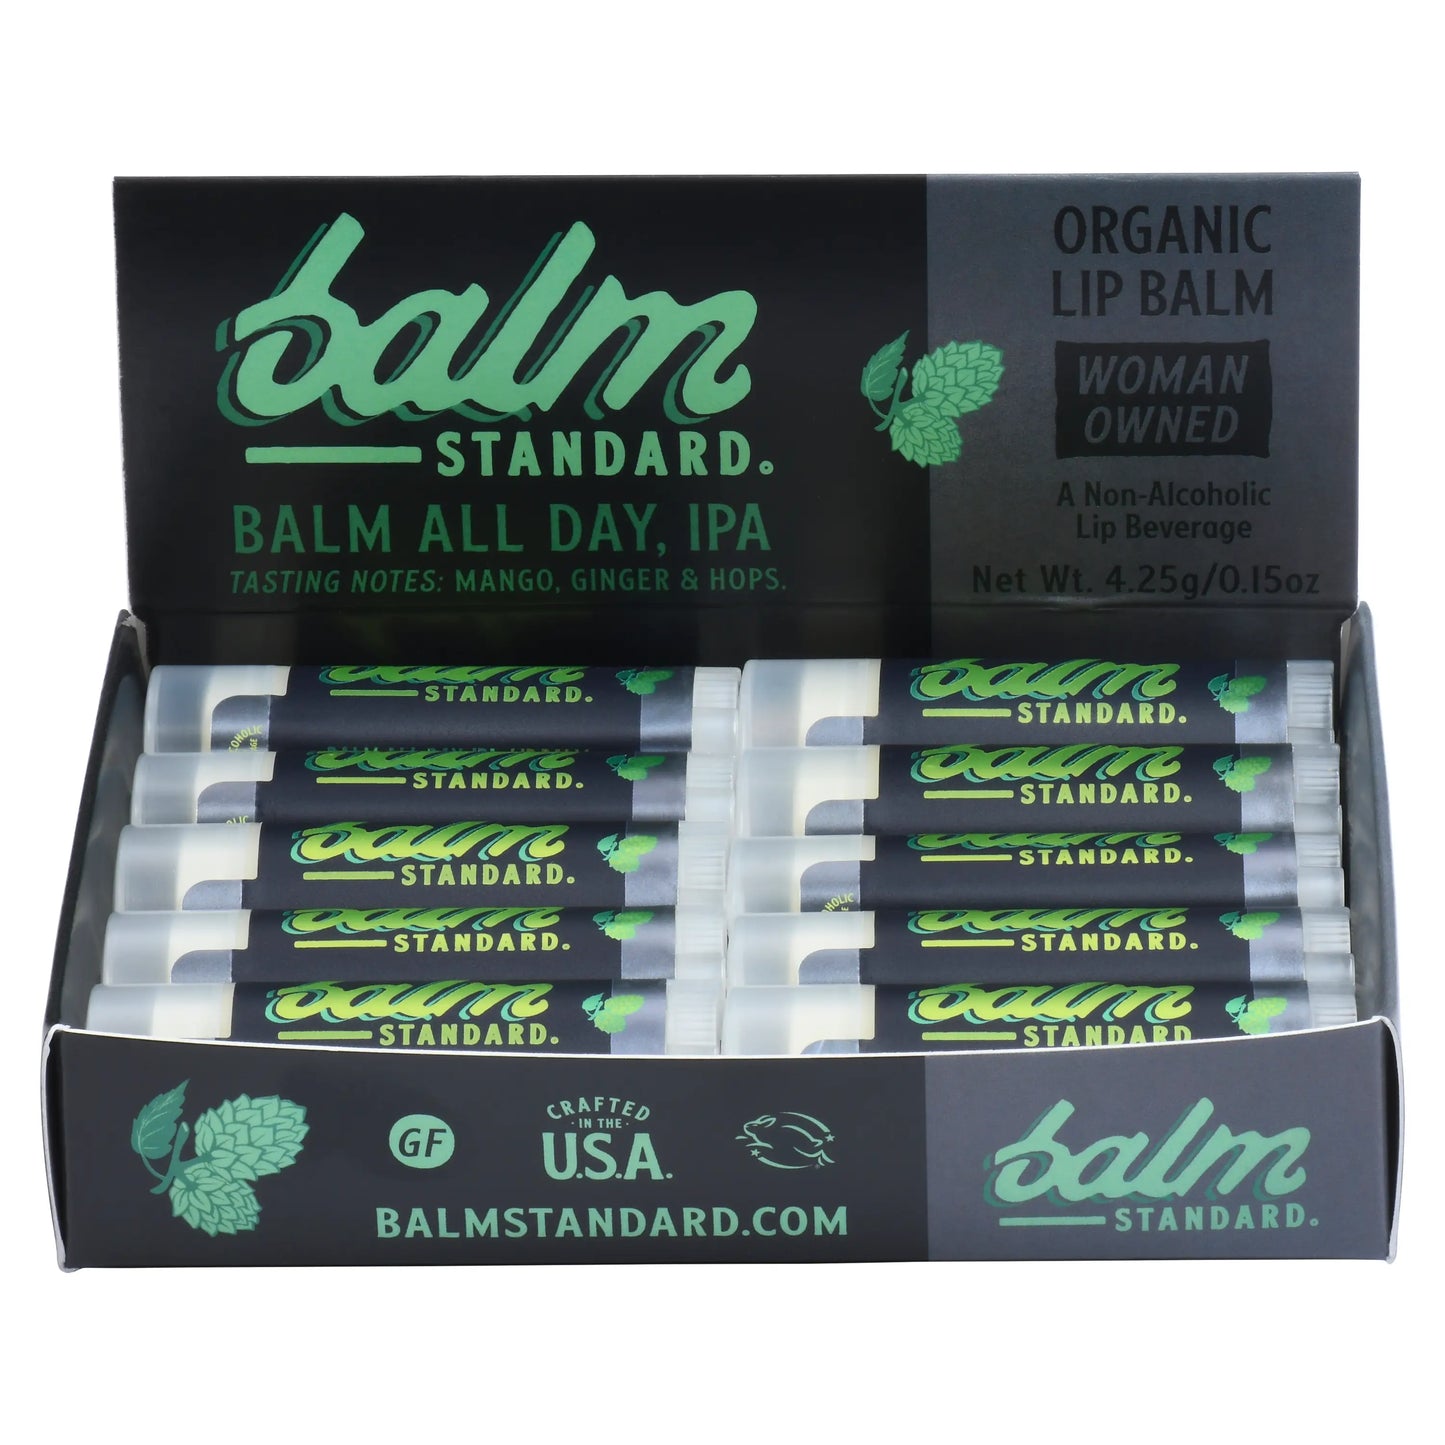 Balm Standard Lip Balm - Balm All Day, IPA